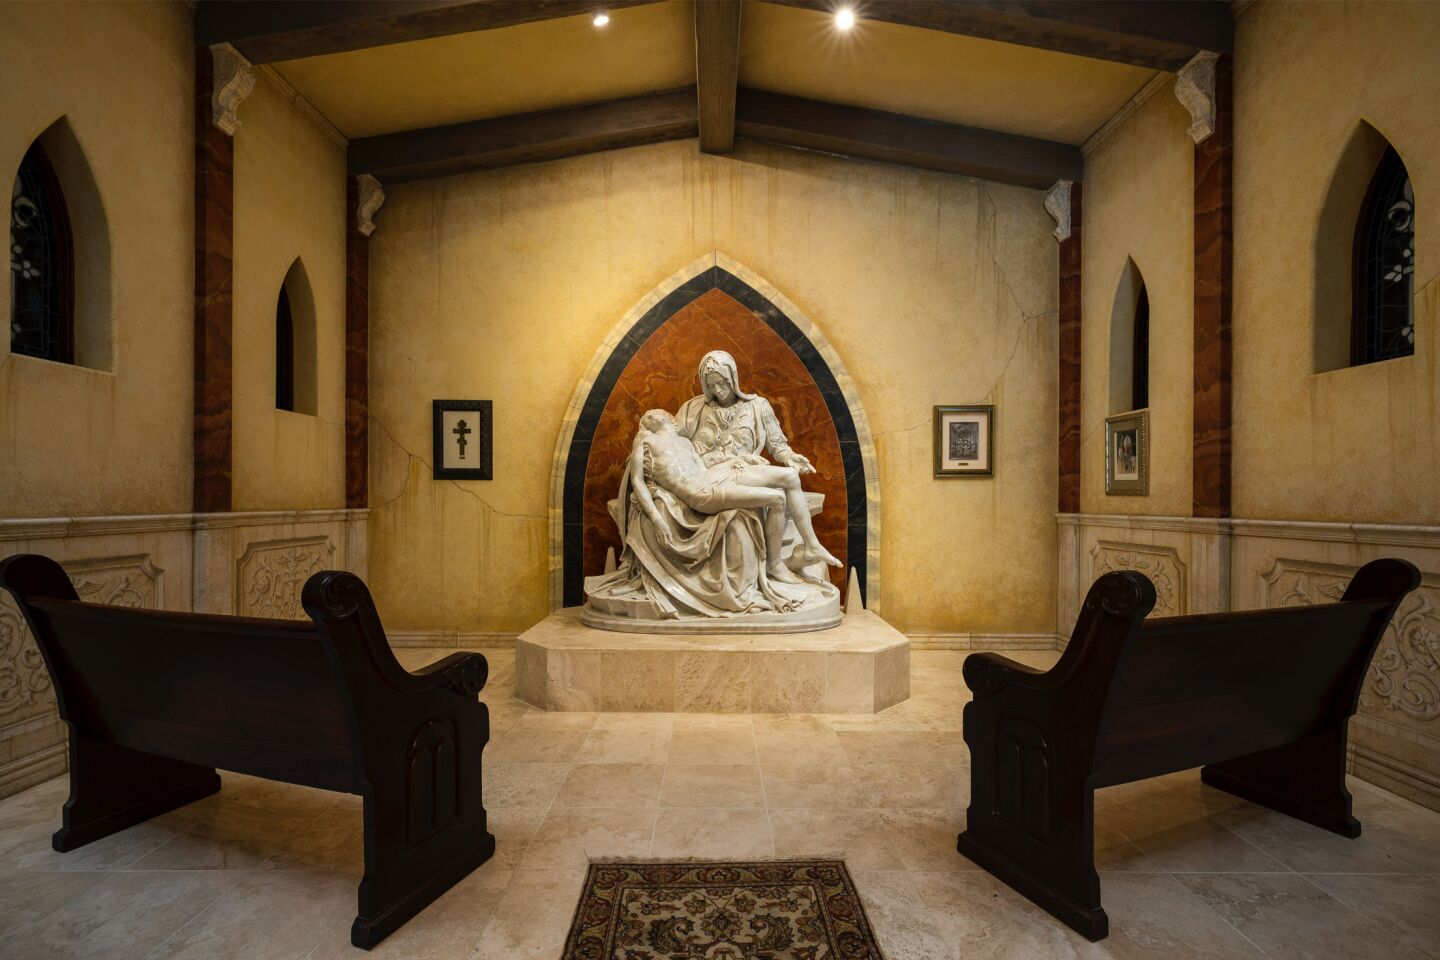 The Pietà sculpture.